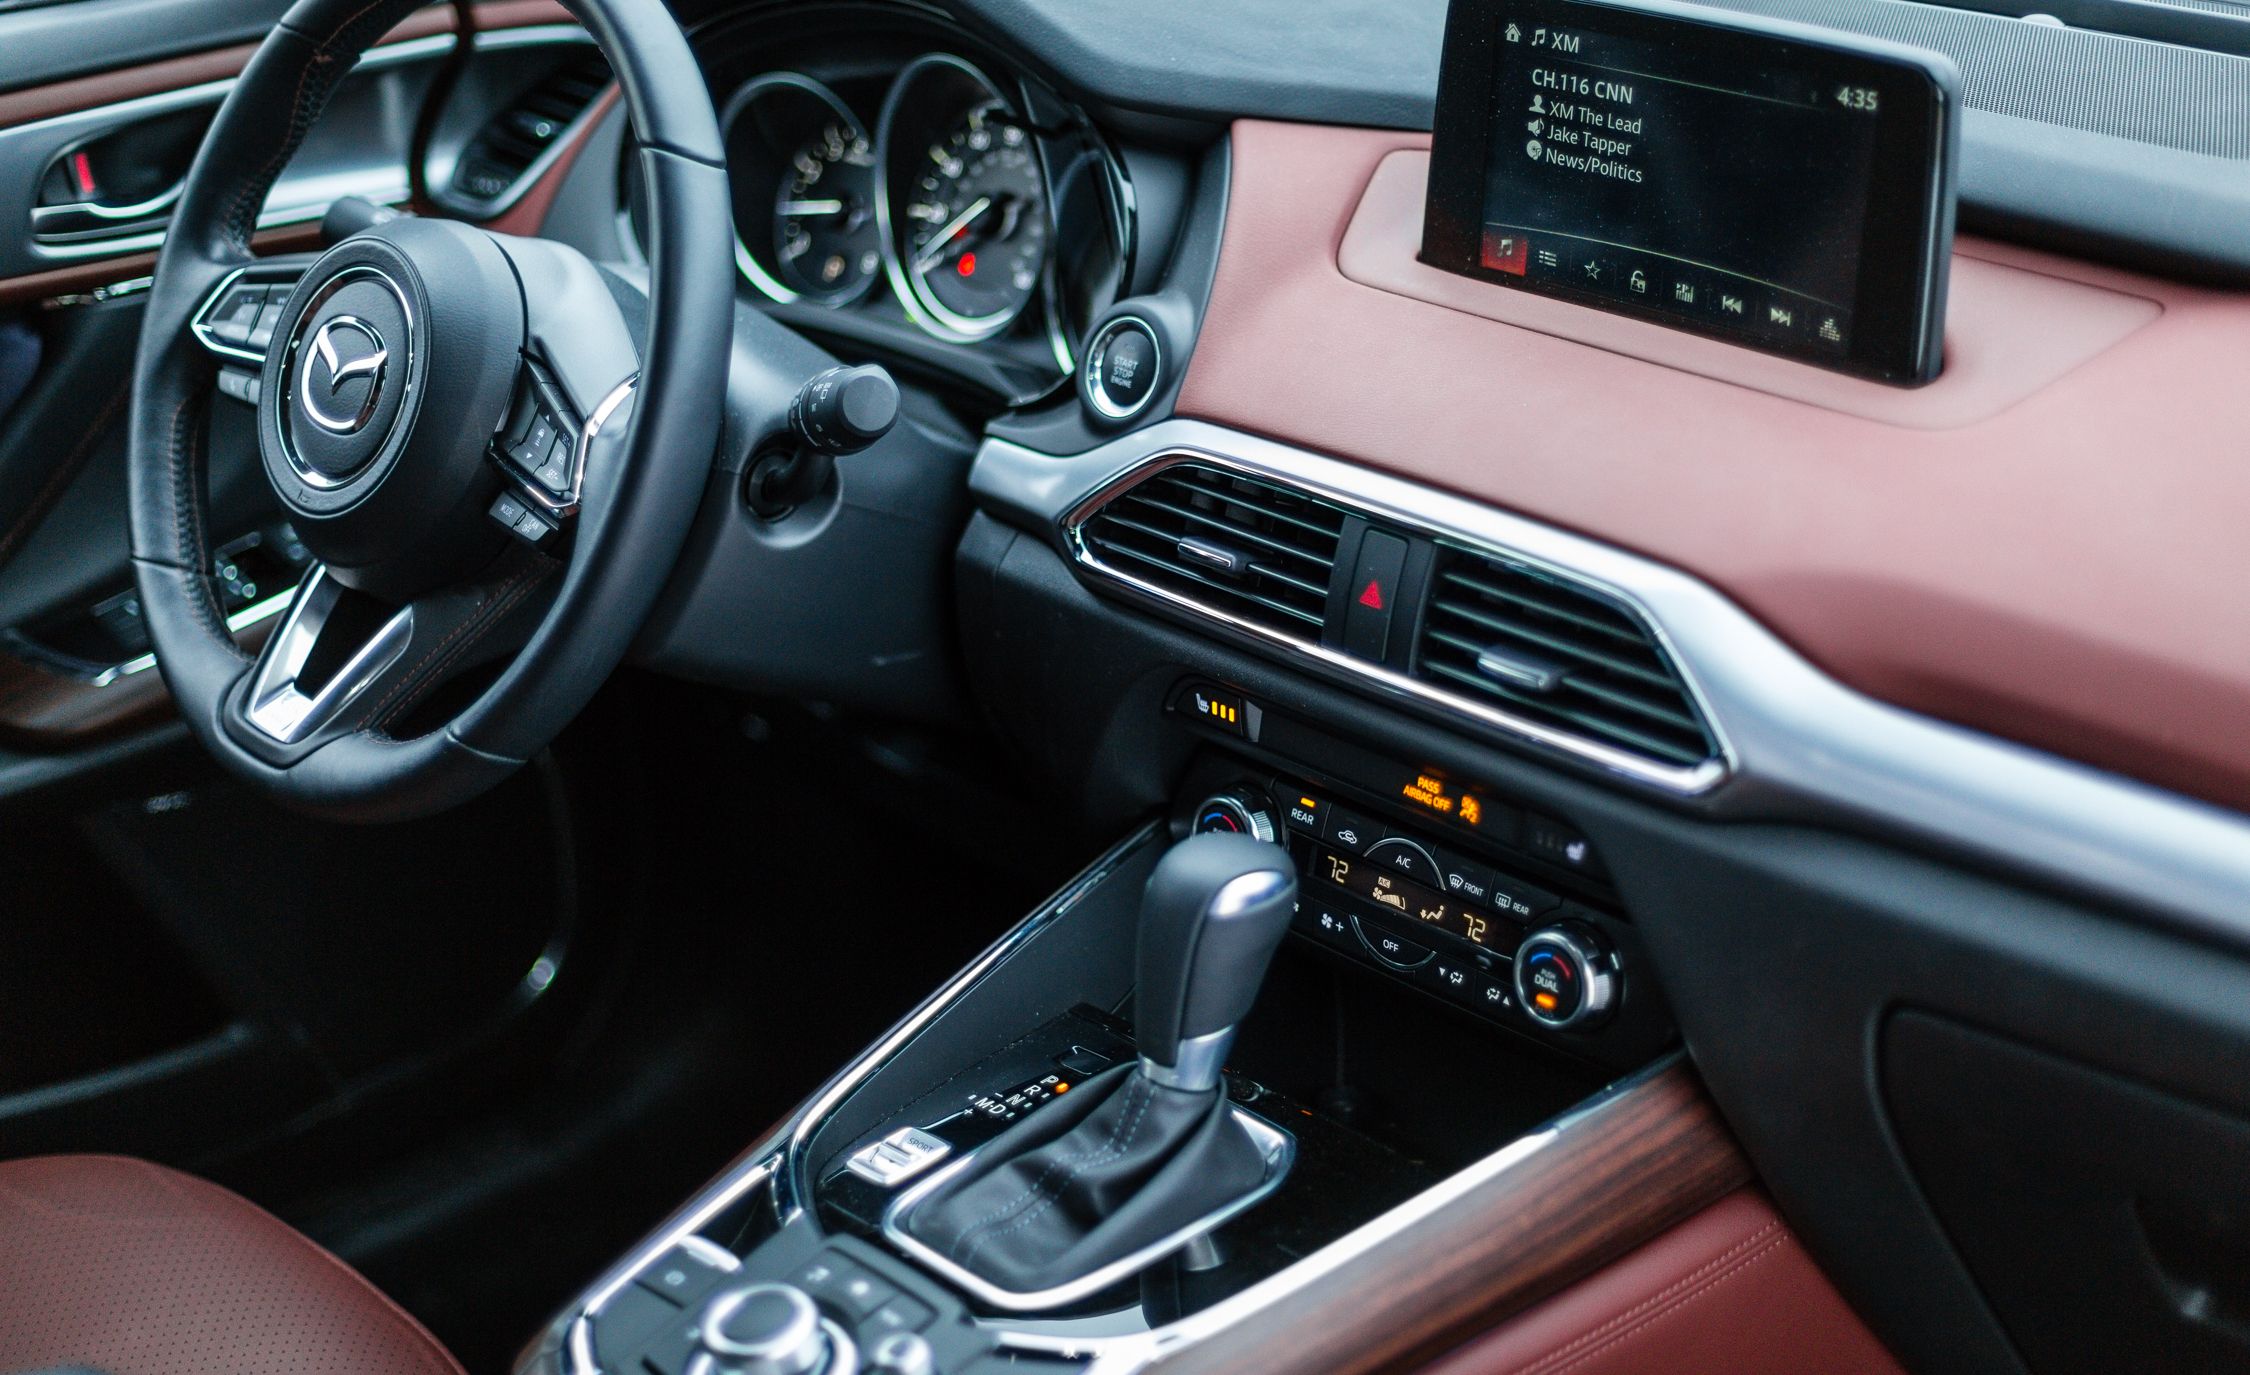 2017 Mazda CX 9 Interior View Center Headunit Screen (View 14 of 28)